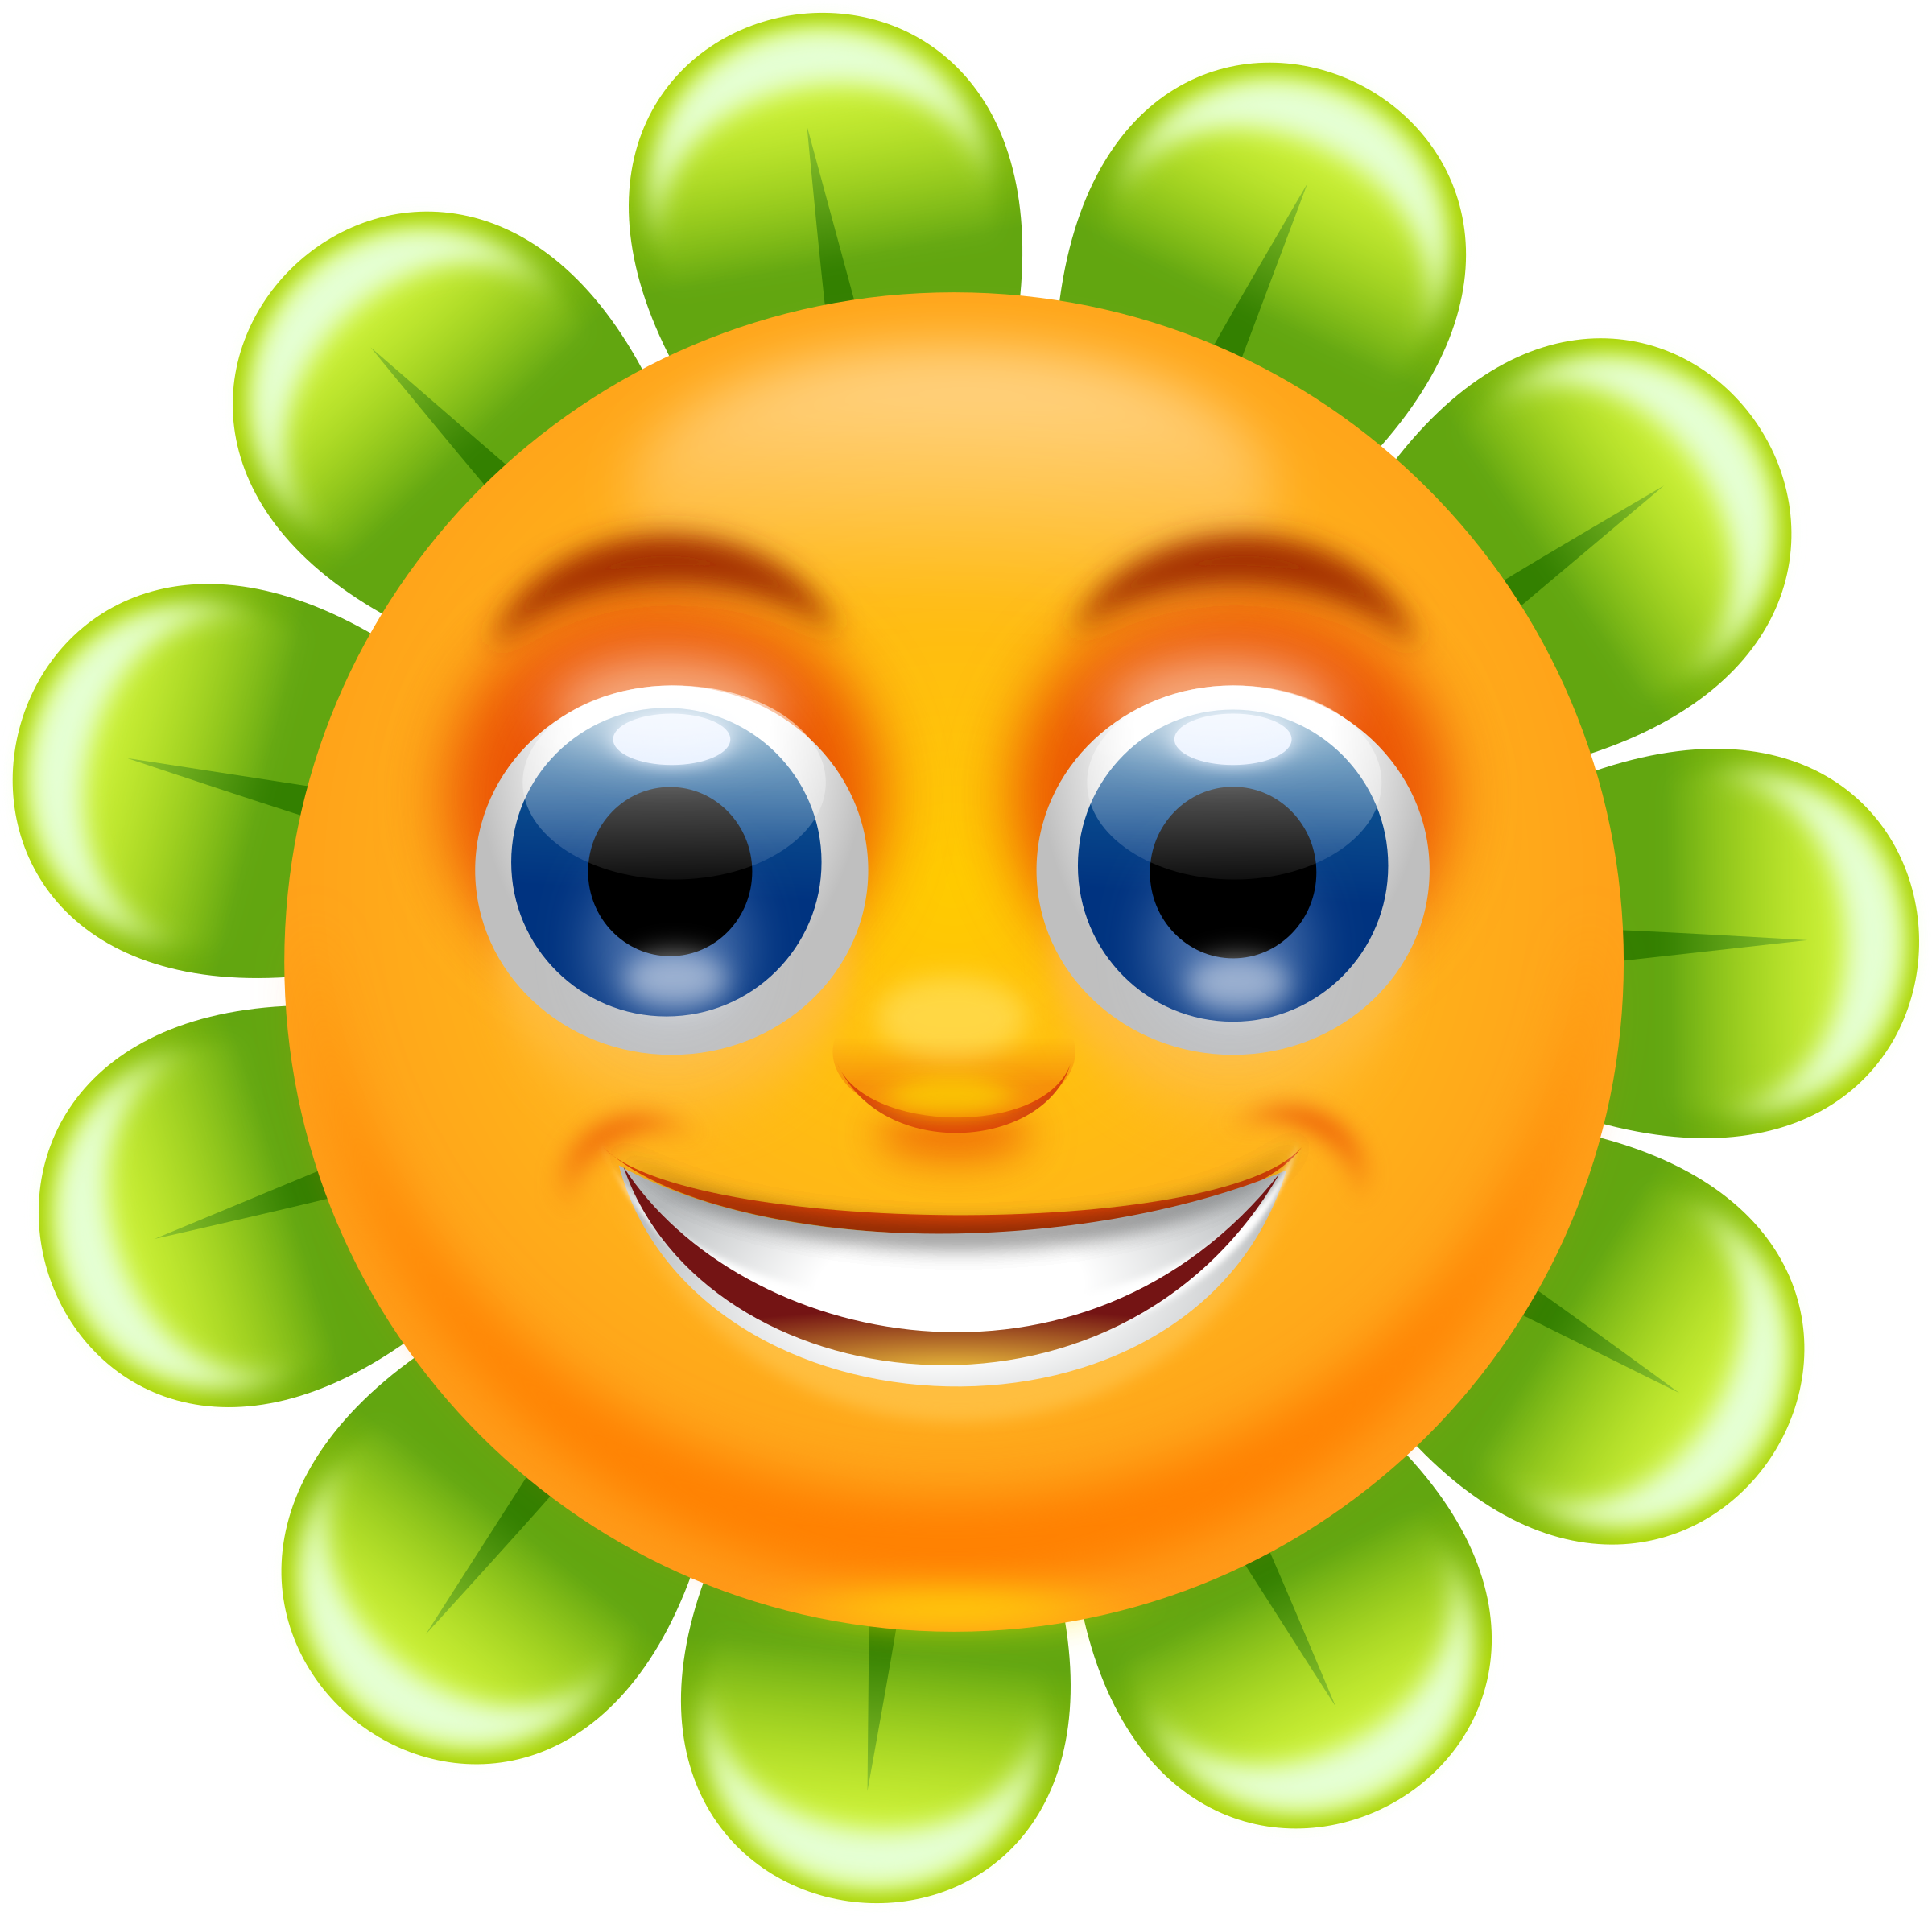 Daisy clipart smile. Smiling flower remix big